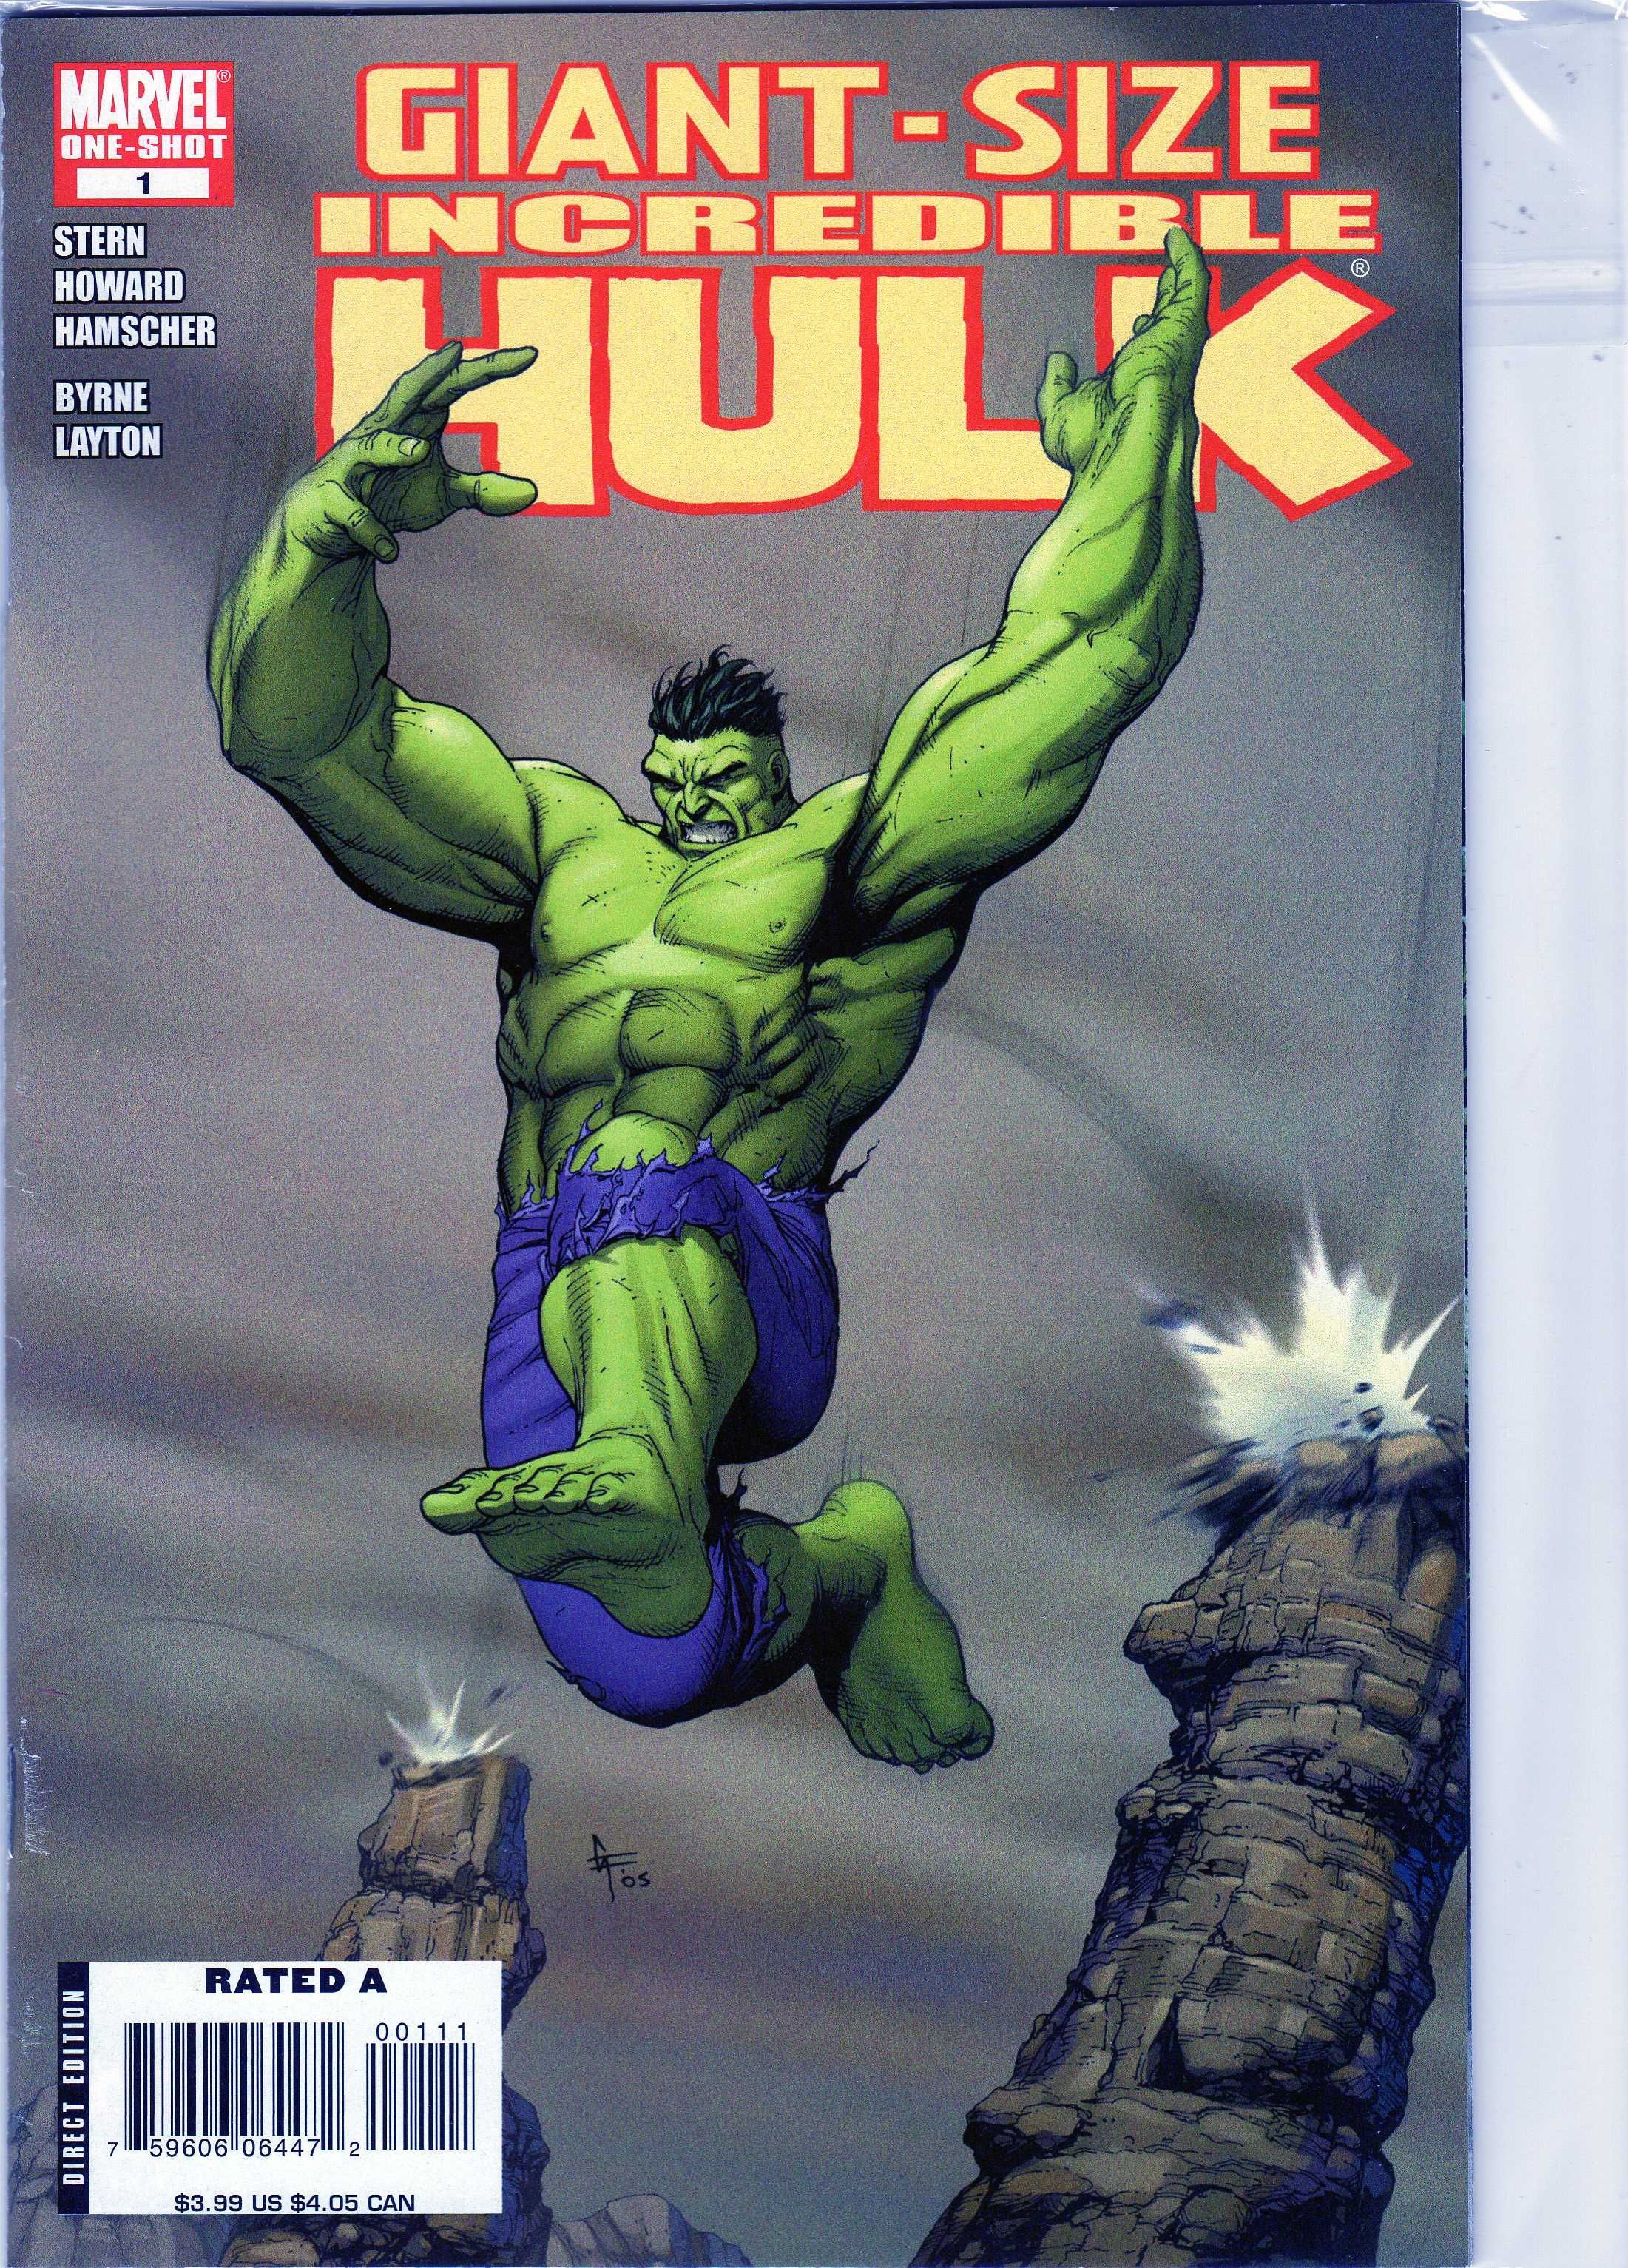 Giant-Size Incredible Hulk #1 Marvel One-Shot - benzi desenate